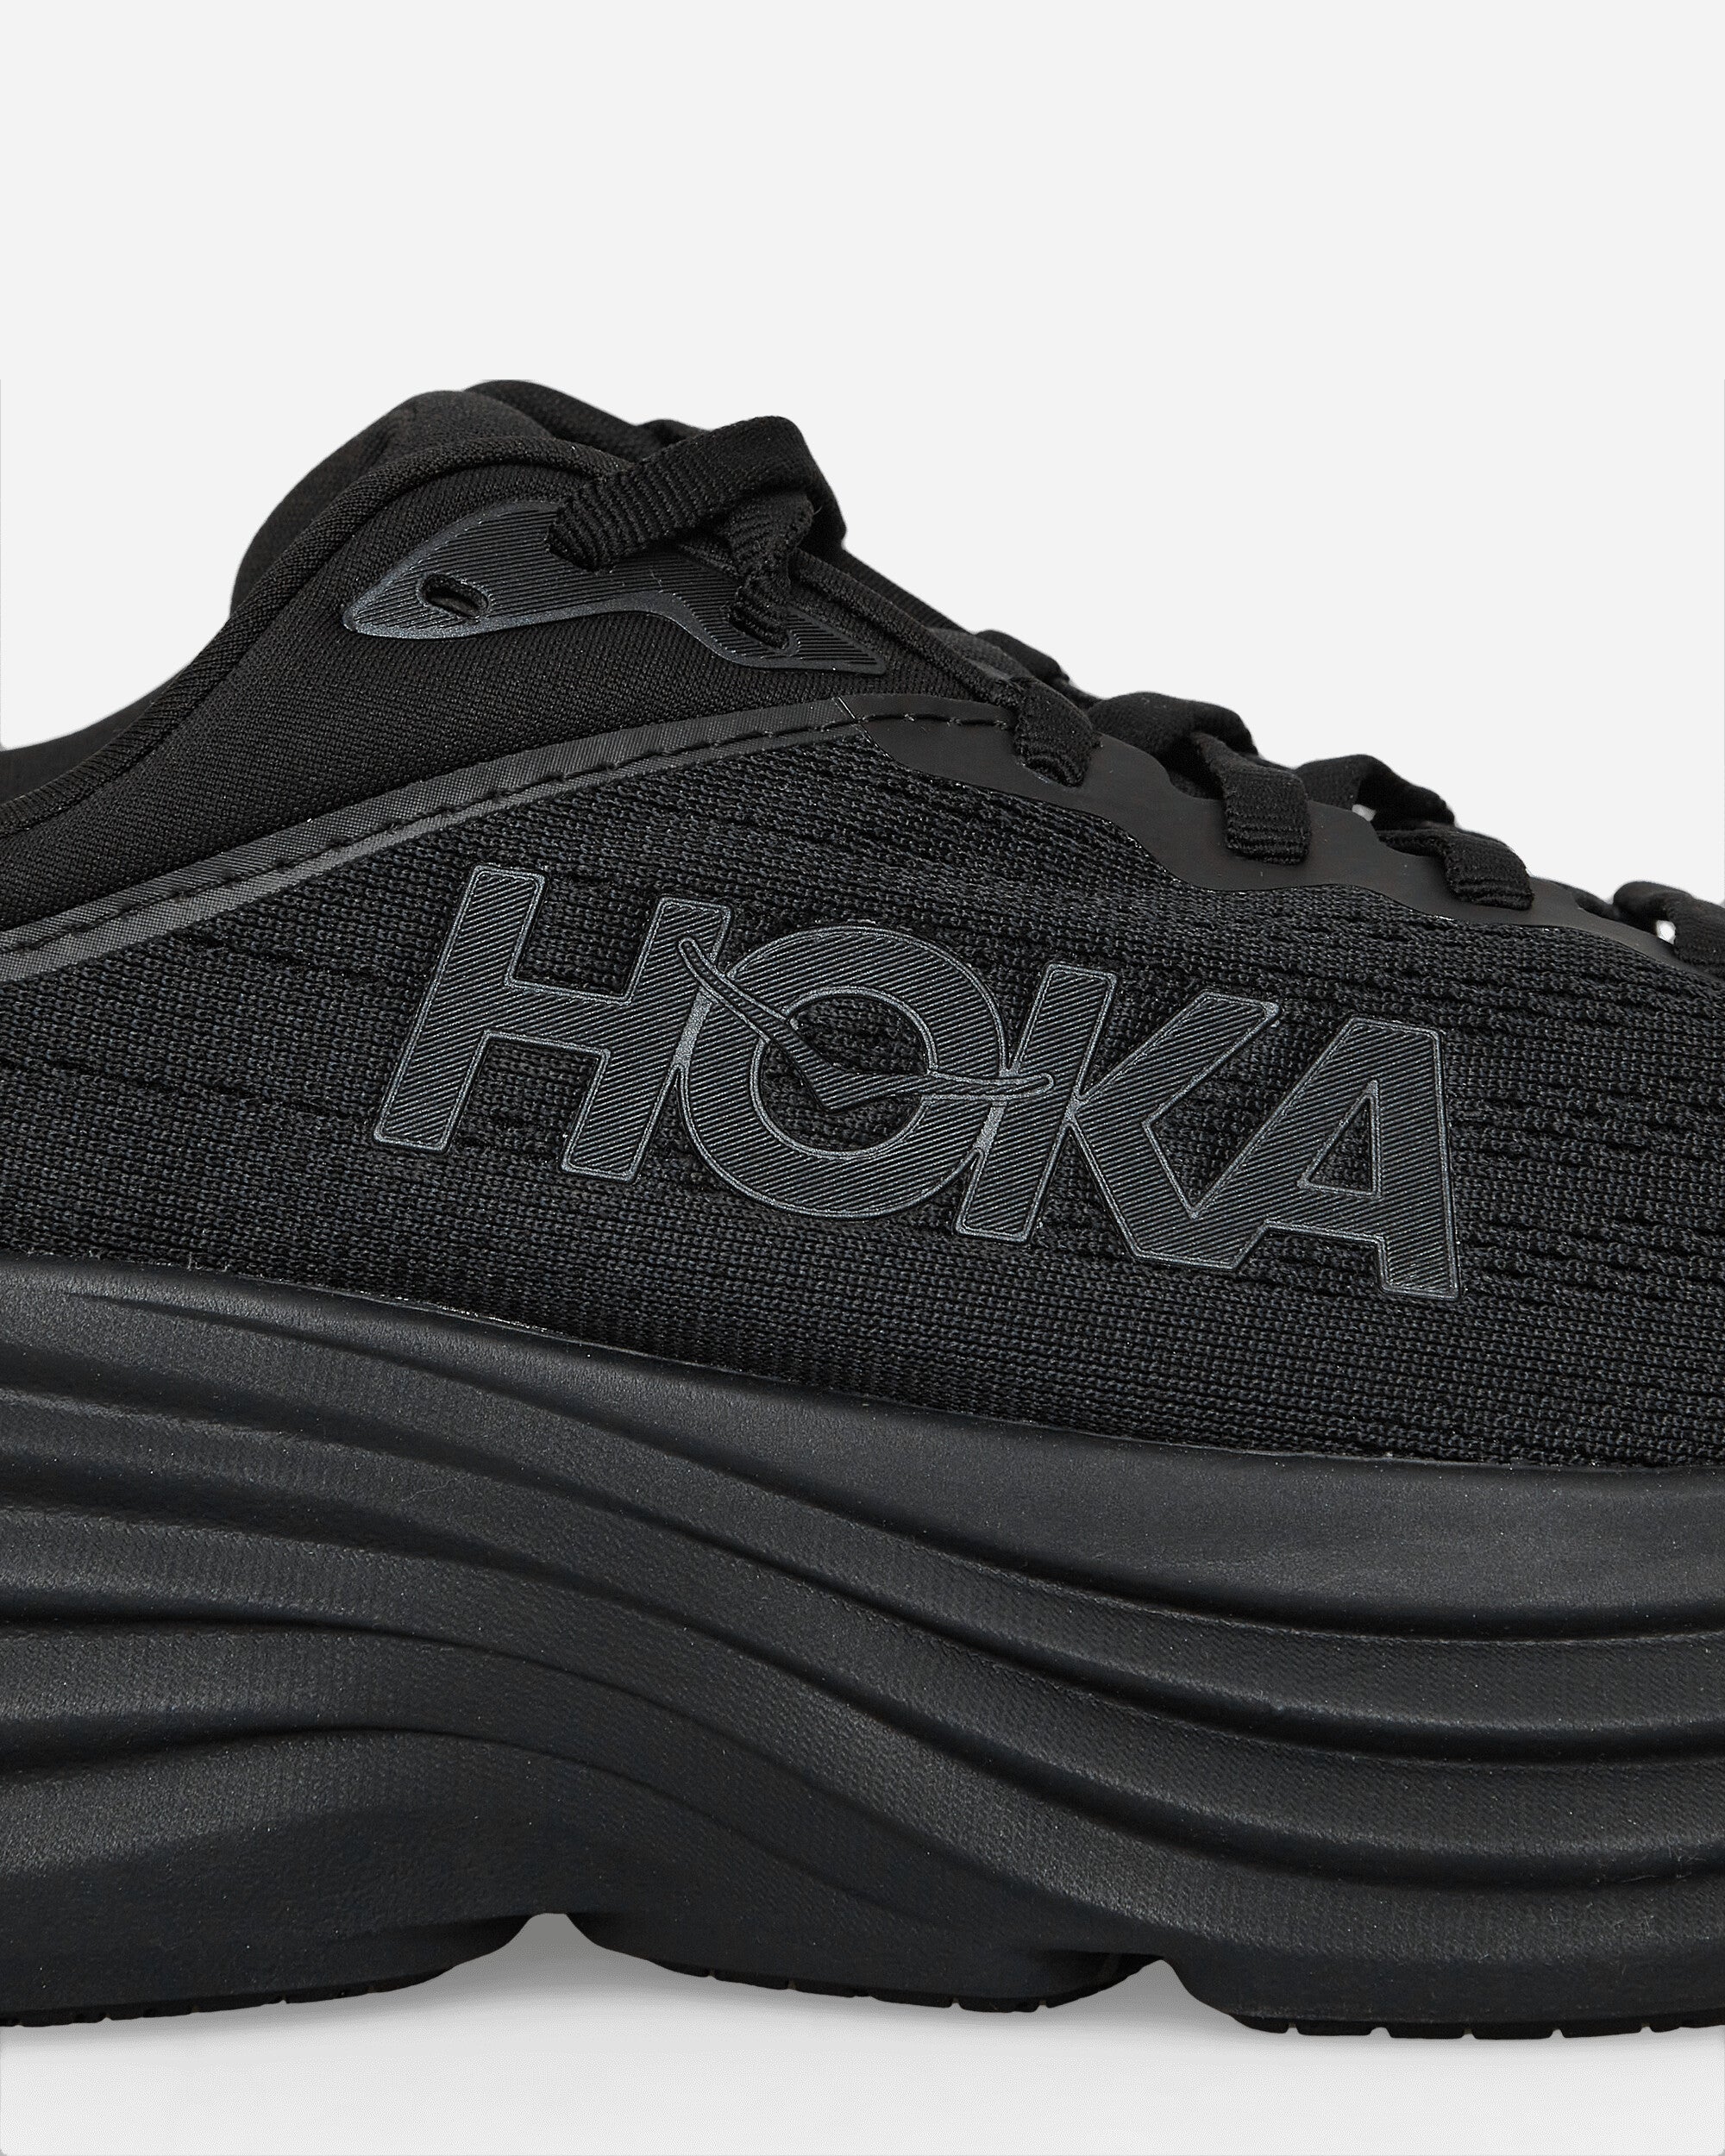 Hoka One One M Bondi 8 Black Sneakers Low HK.1123202-BBLC